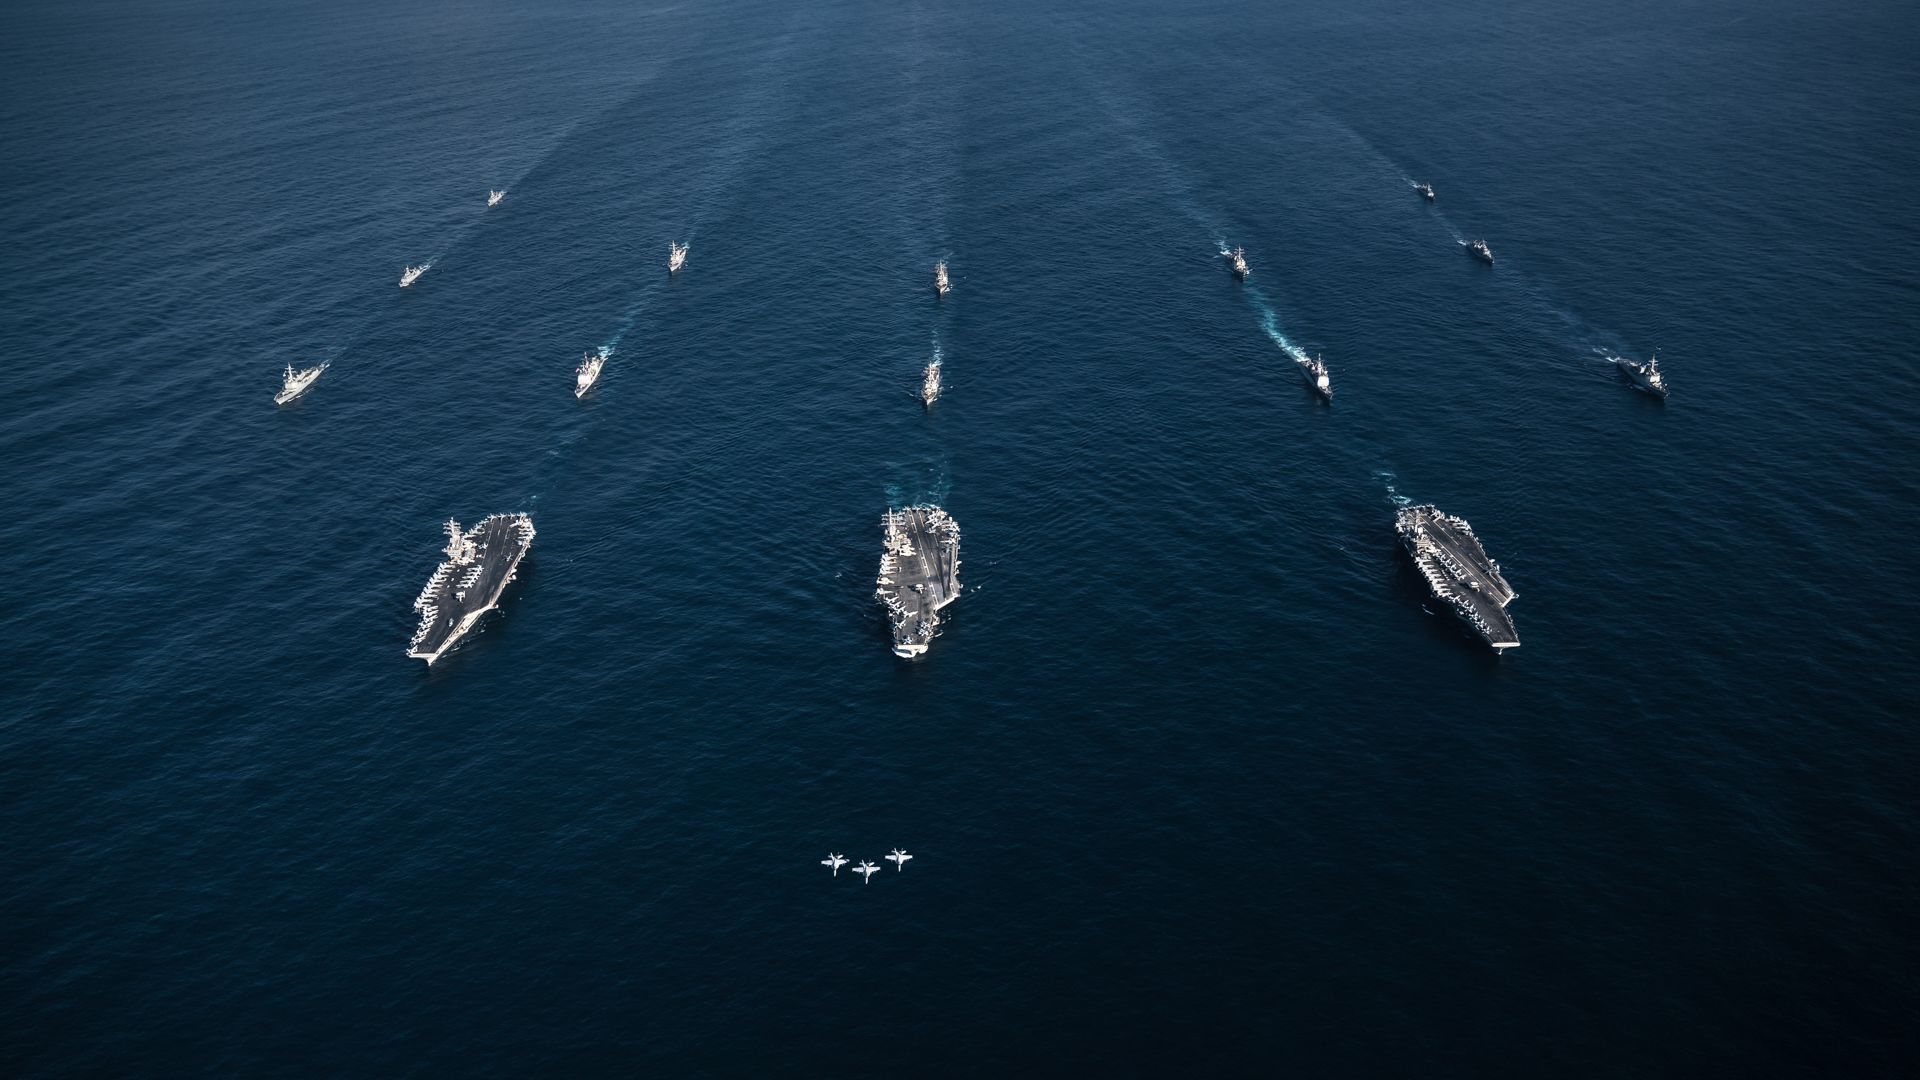 north korean navy fleet